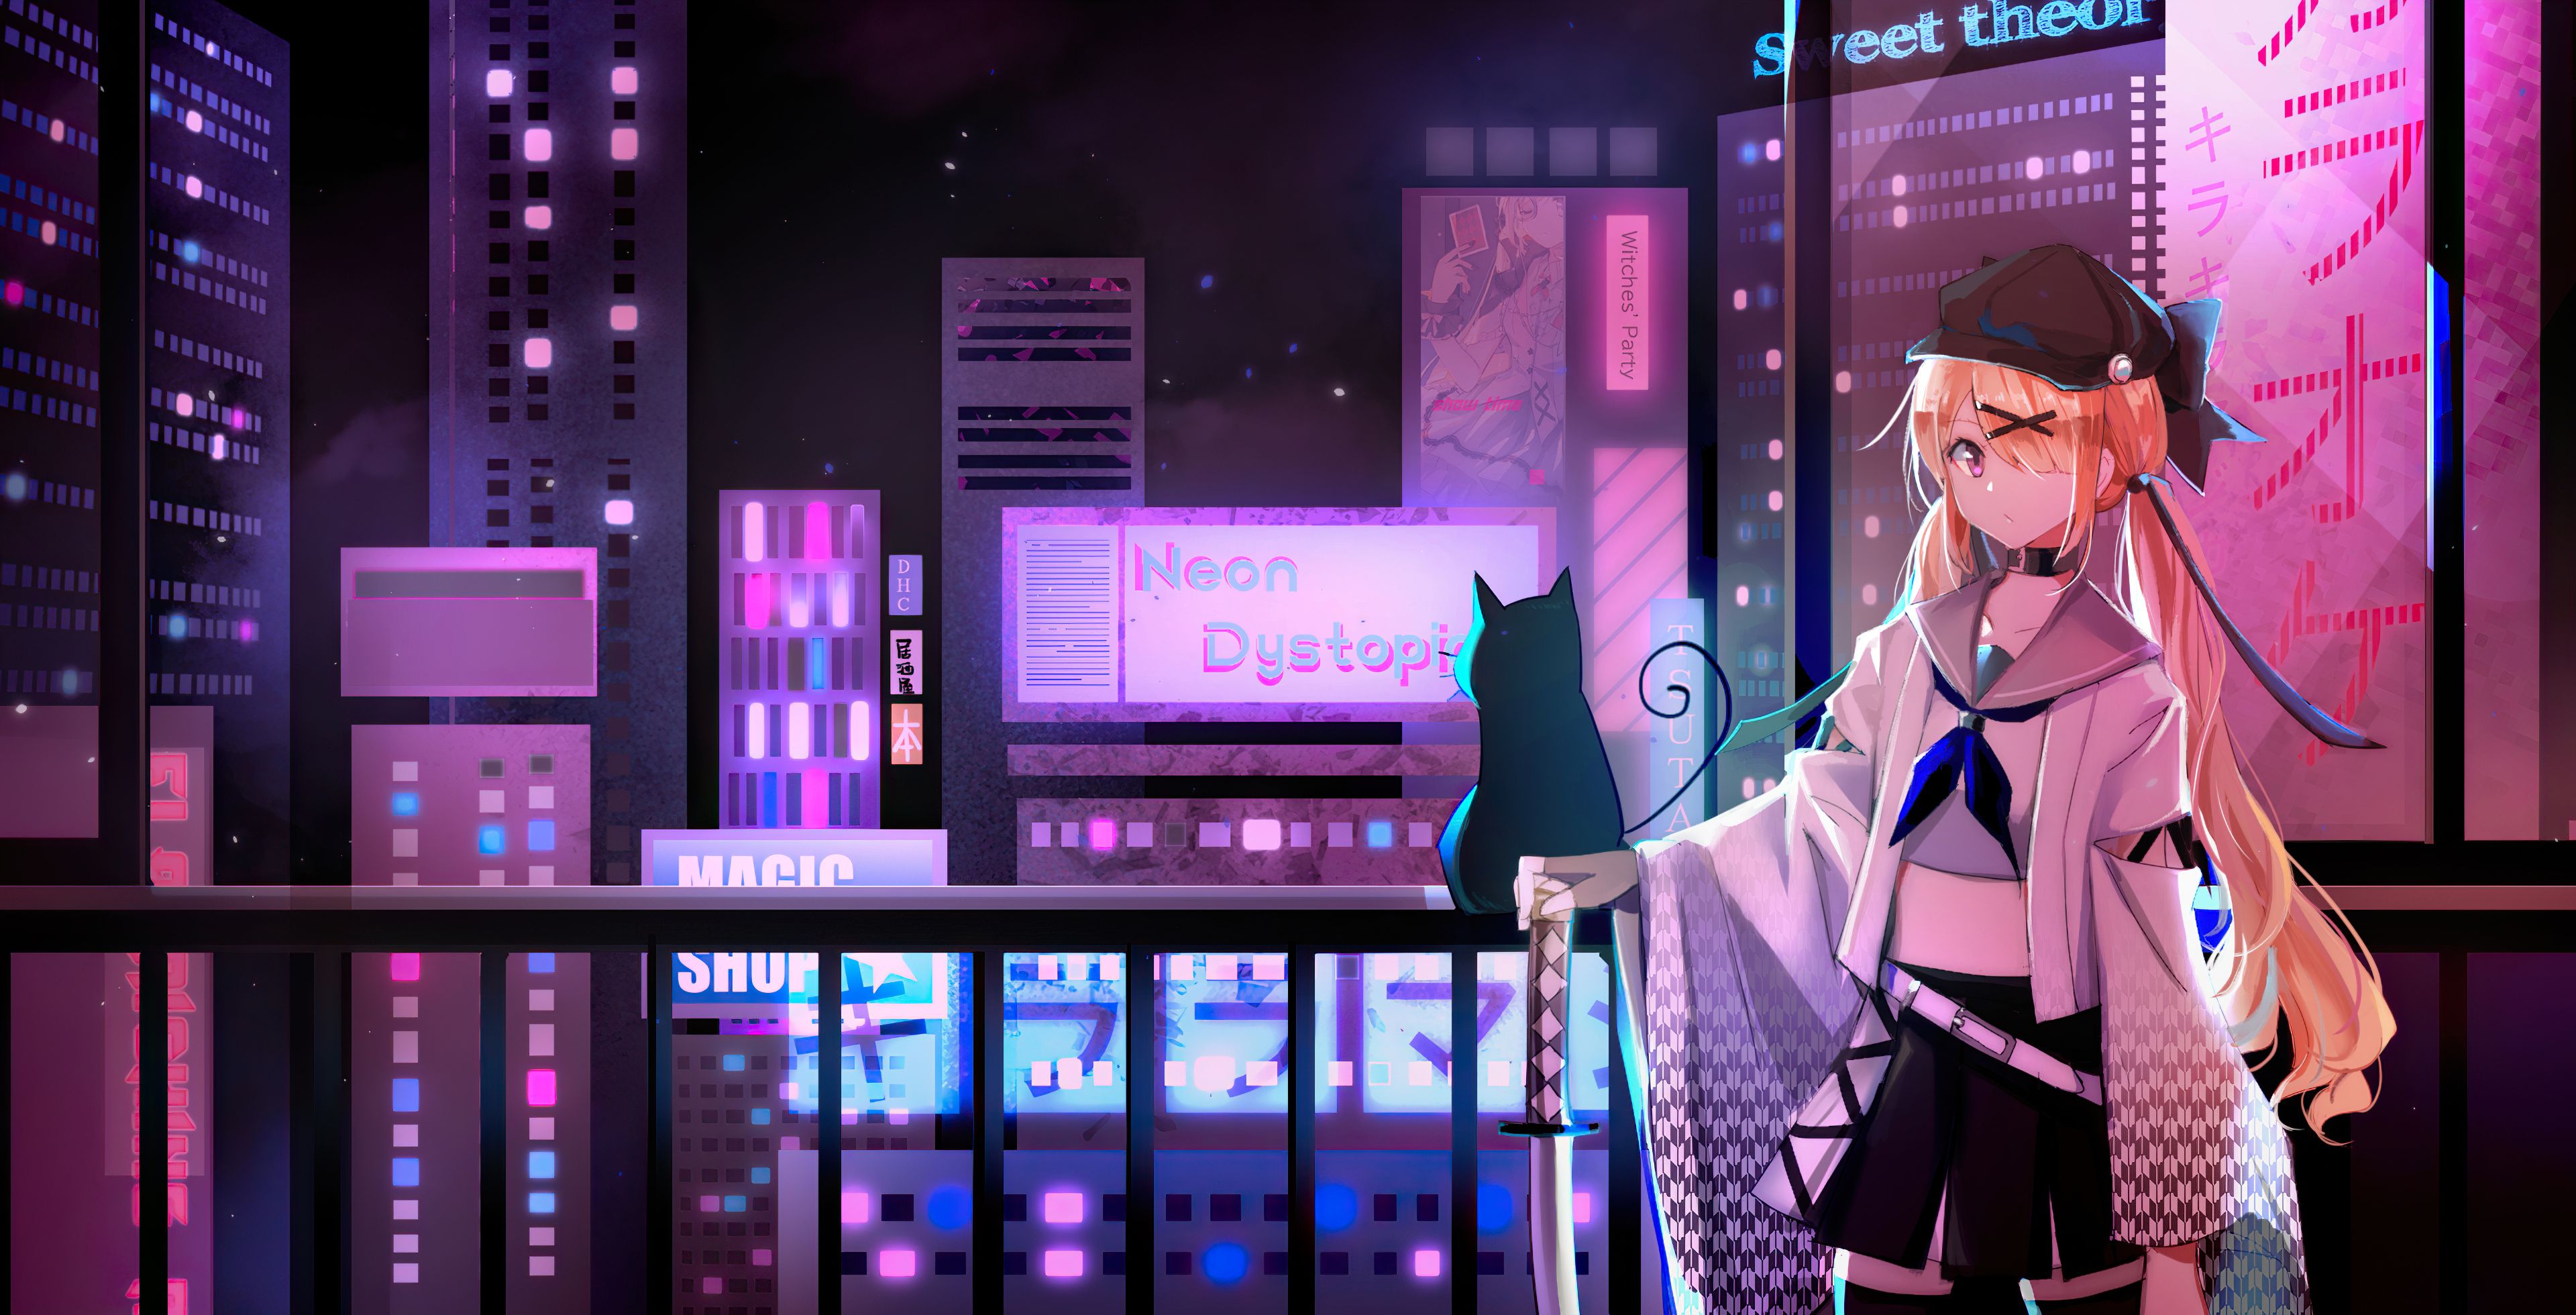 Kirara Magic Neon Dystopia, HD Anime, 4k Wallpaper, Image, Background, Photo and Picture